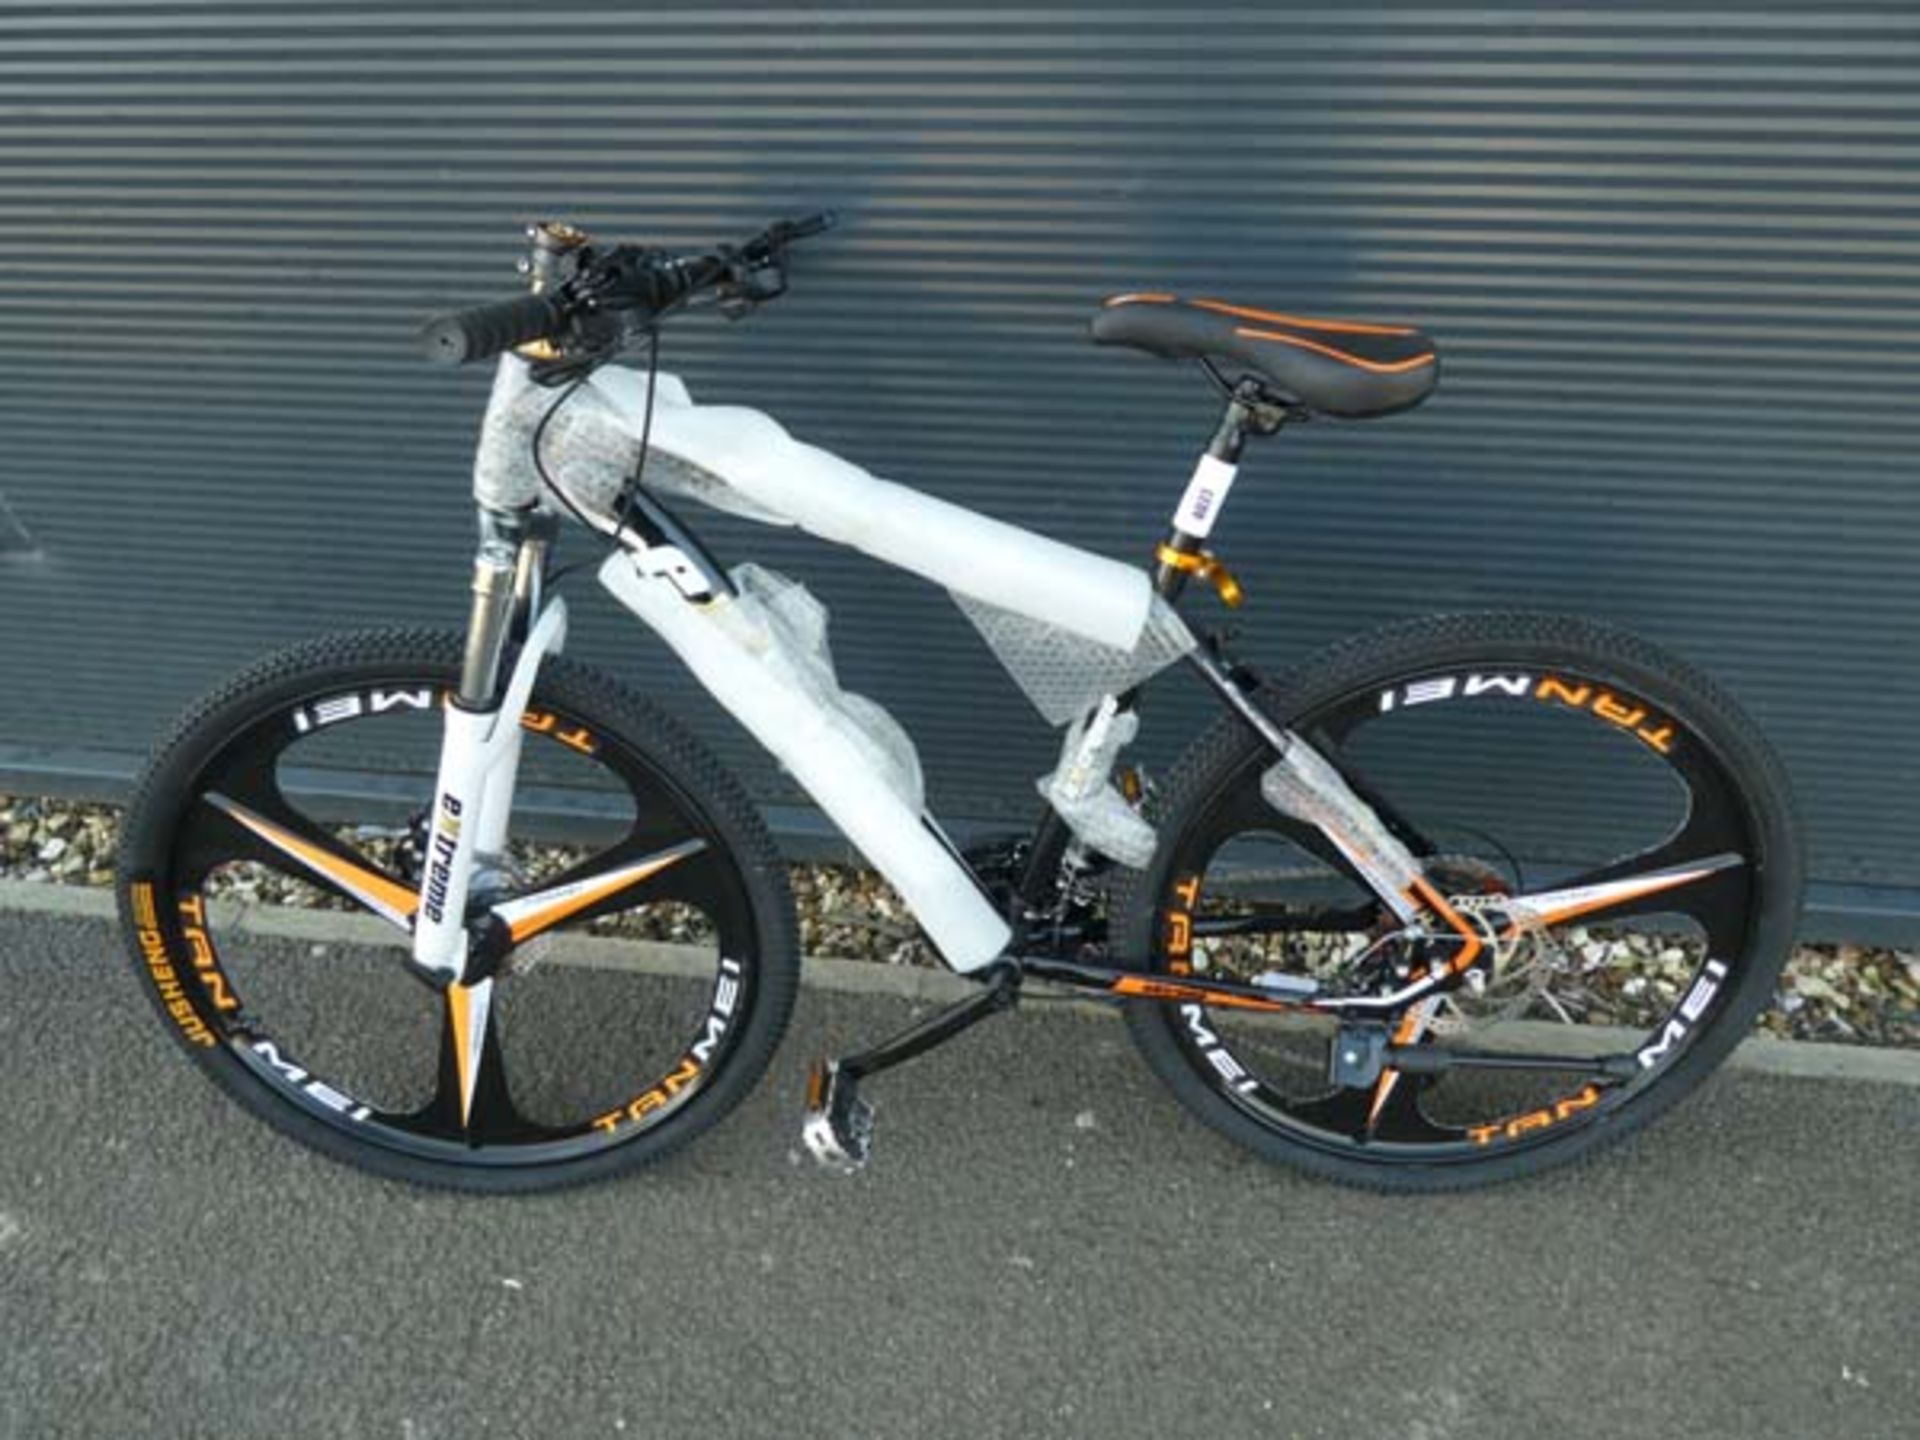 4027 - Black and orange Extreme mountain bike